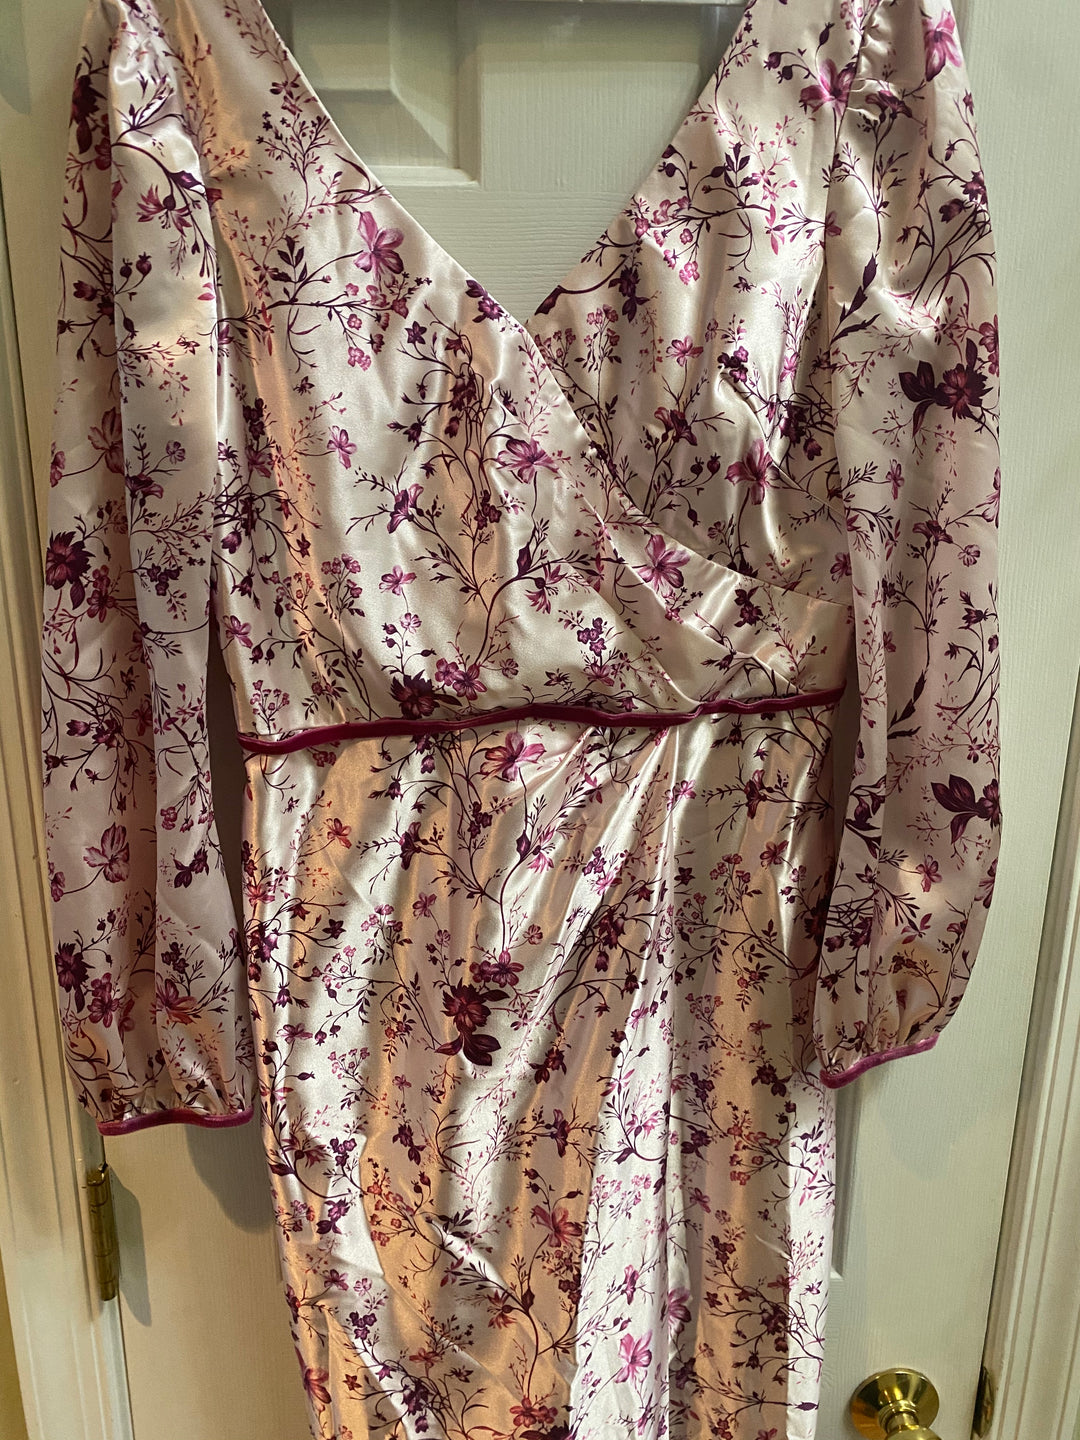 Marchesa Notte Floral Print Satin Gown Size 4